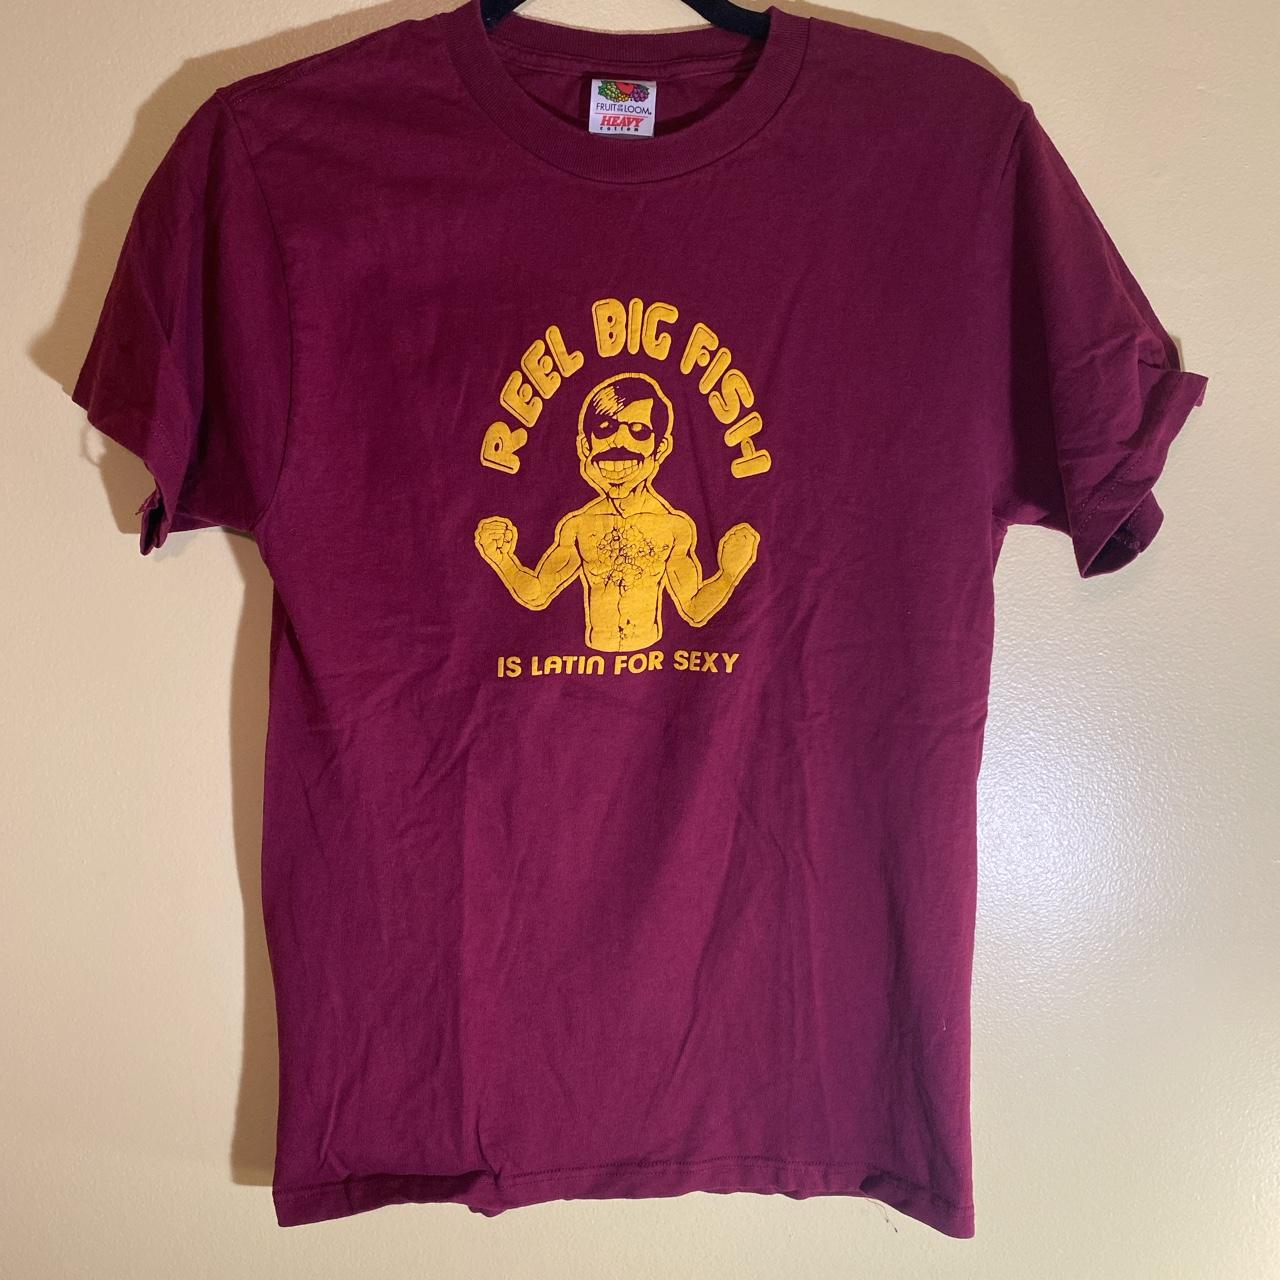 Reel Big Fish Skank Guy T-Shirt